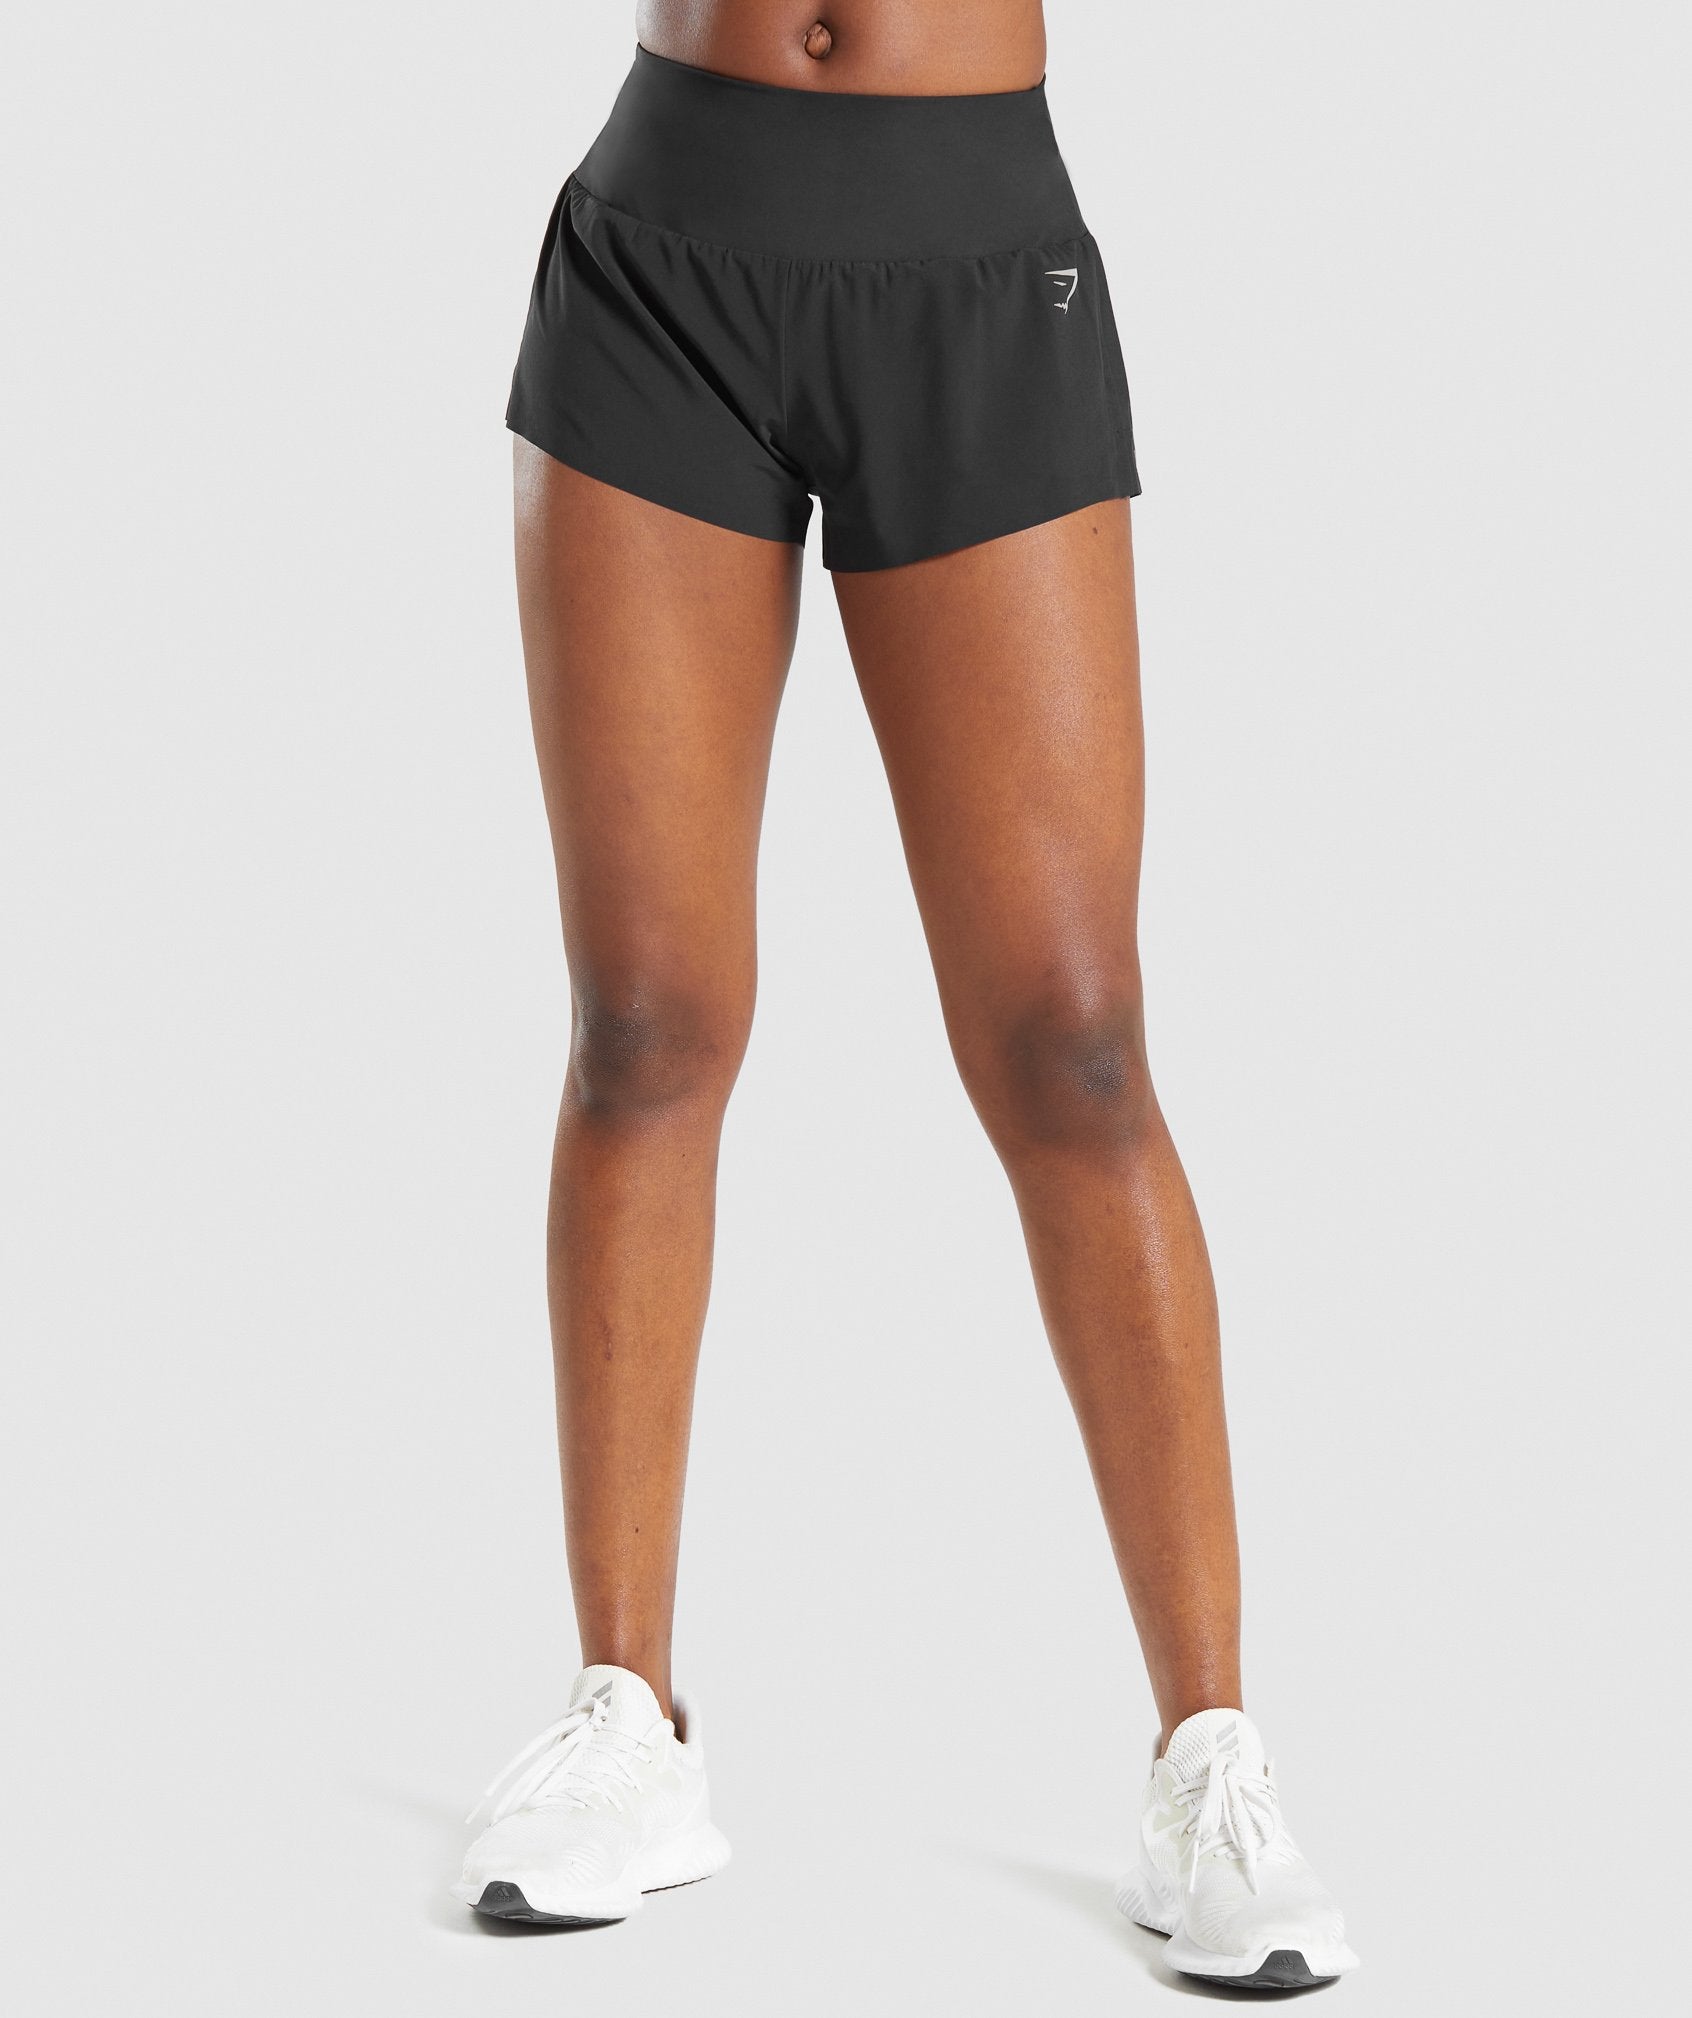 Gymshark Speed Shorts Black Women's medium